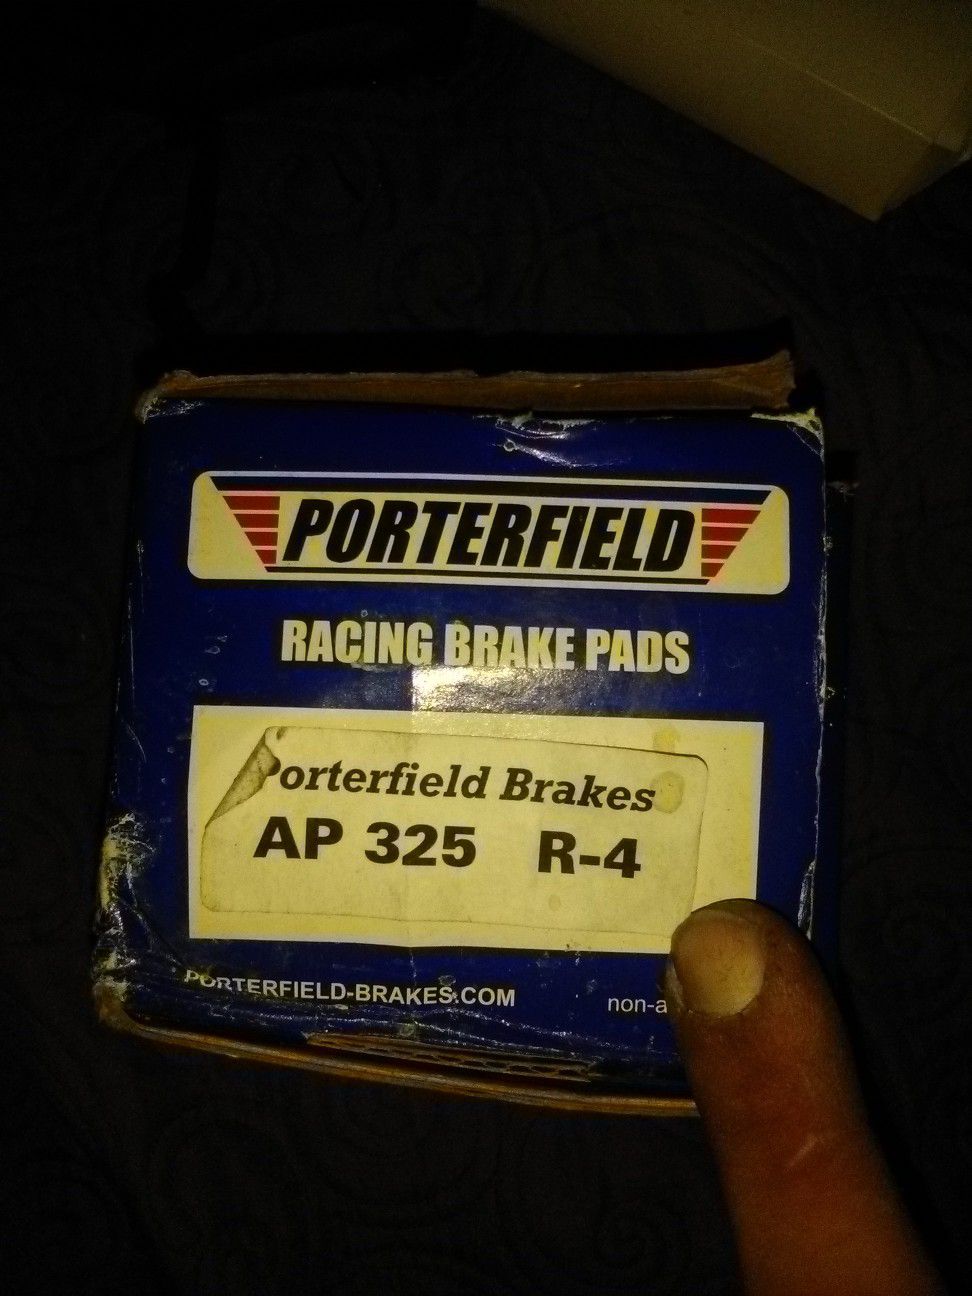 Porterfield racing brake pads